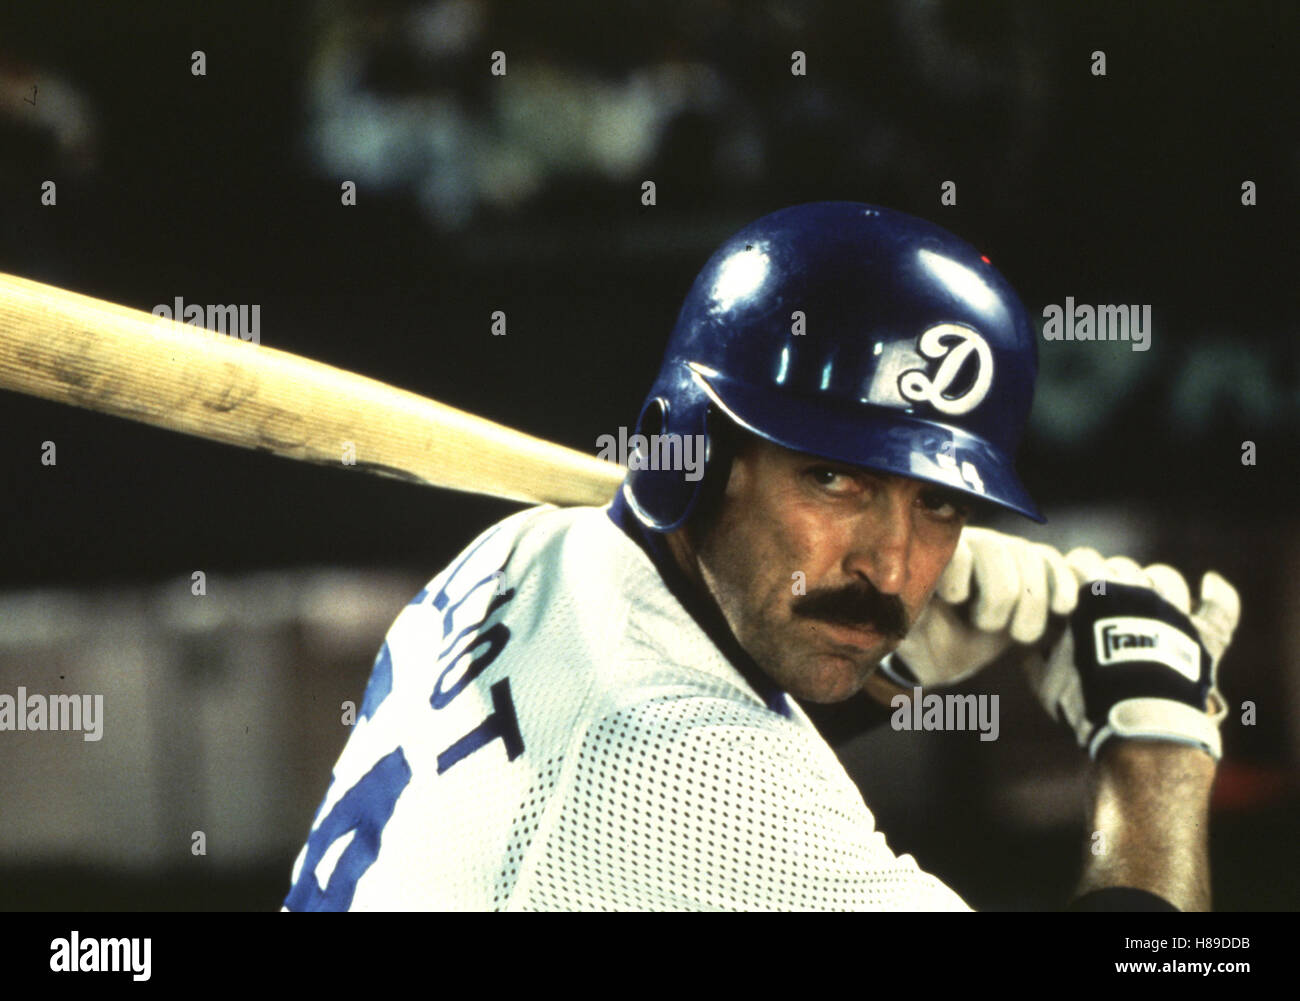 Mr baseball mr baseball tom hi-res stock photography and images - Alamy